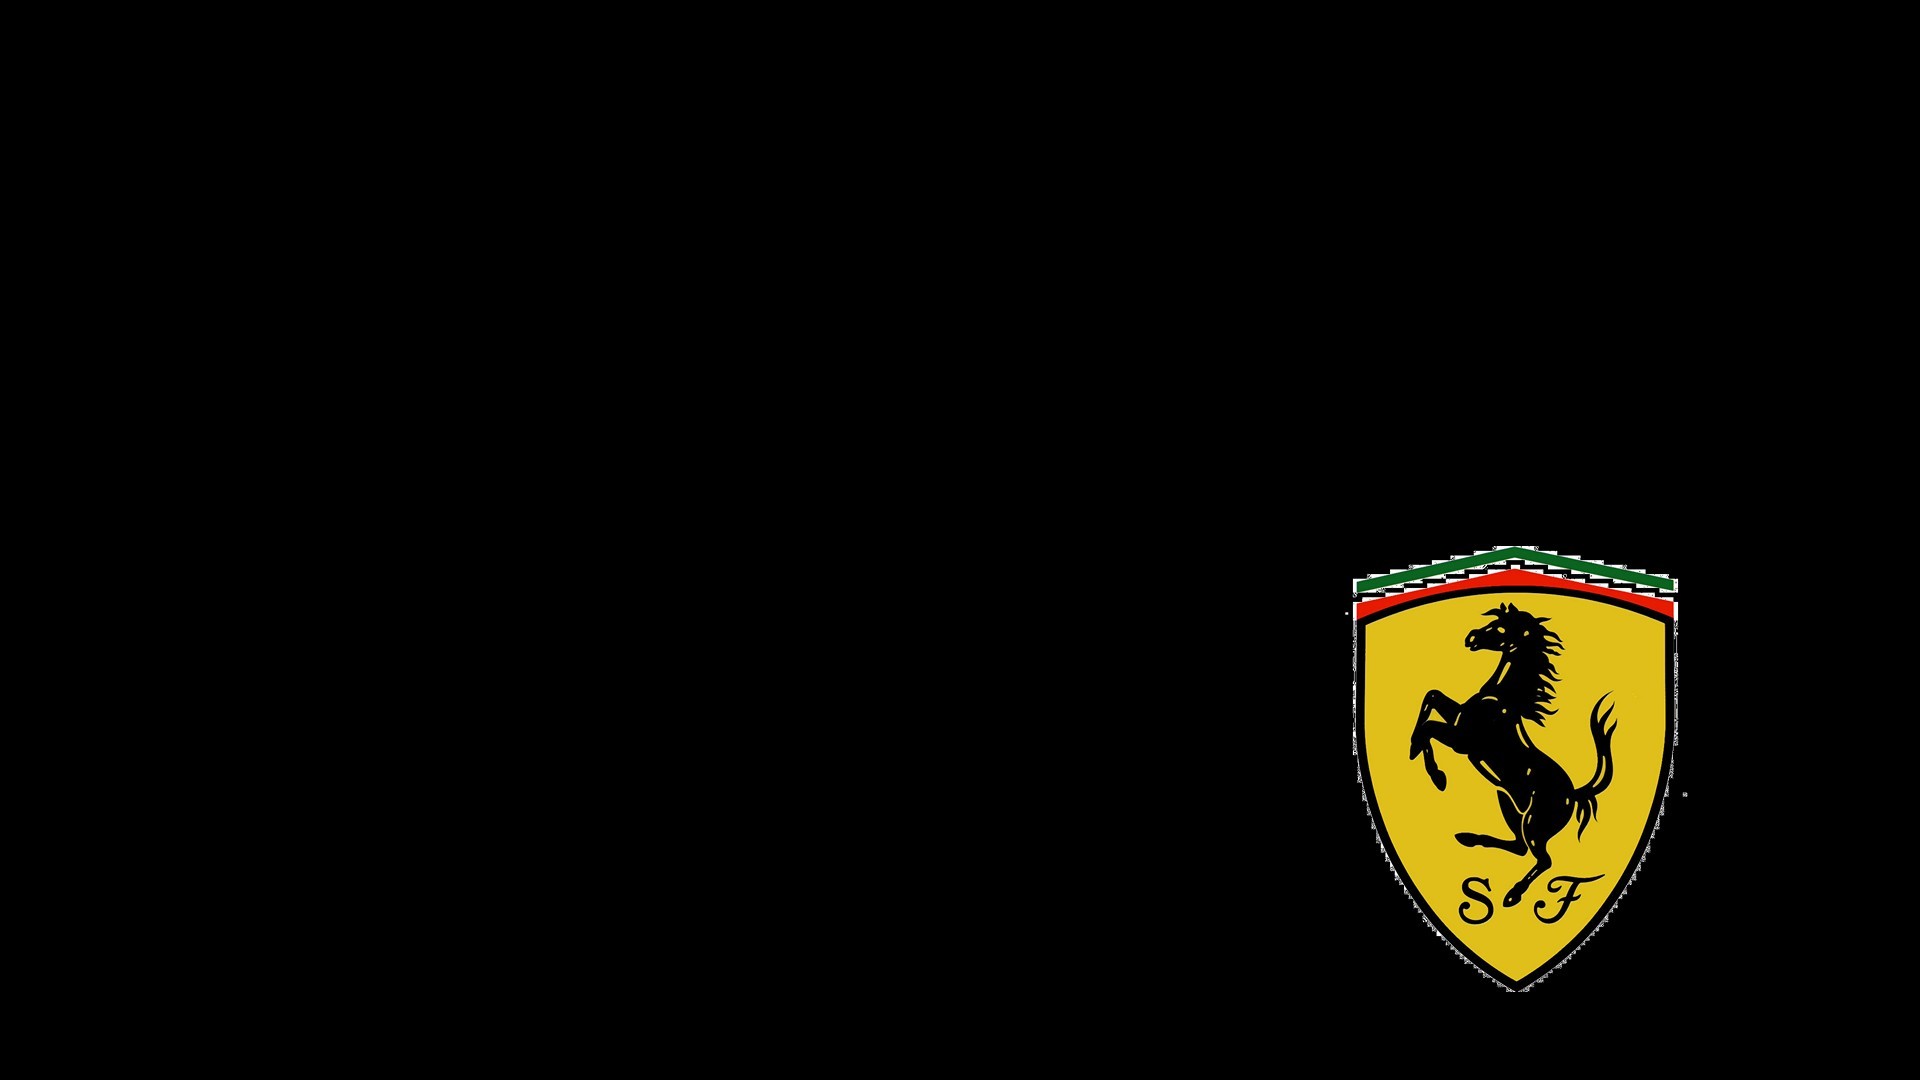 Scuderia Ferrari on X F1Testing wallpapers Weve got those too   essereFerrari  httpstcoVrMUw0ktKe  X